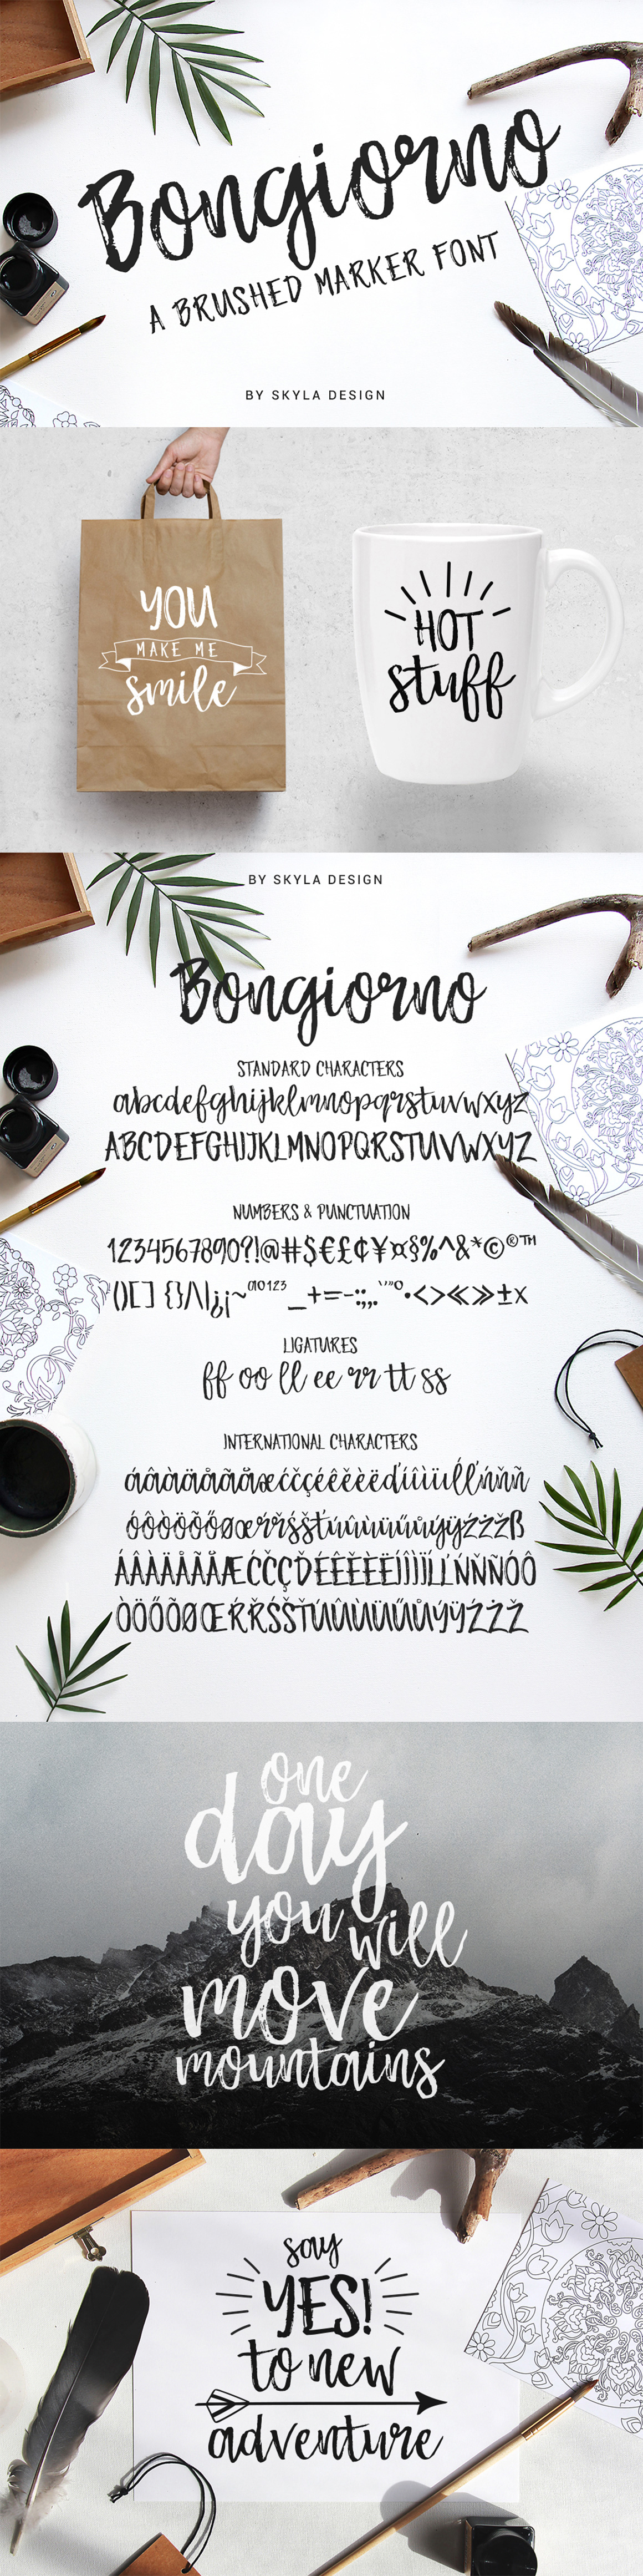 brush-maker-bongiorno-font-by-skyladesign